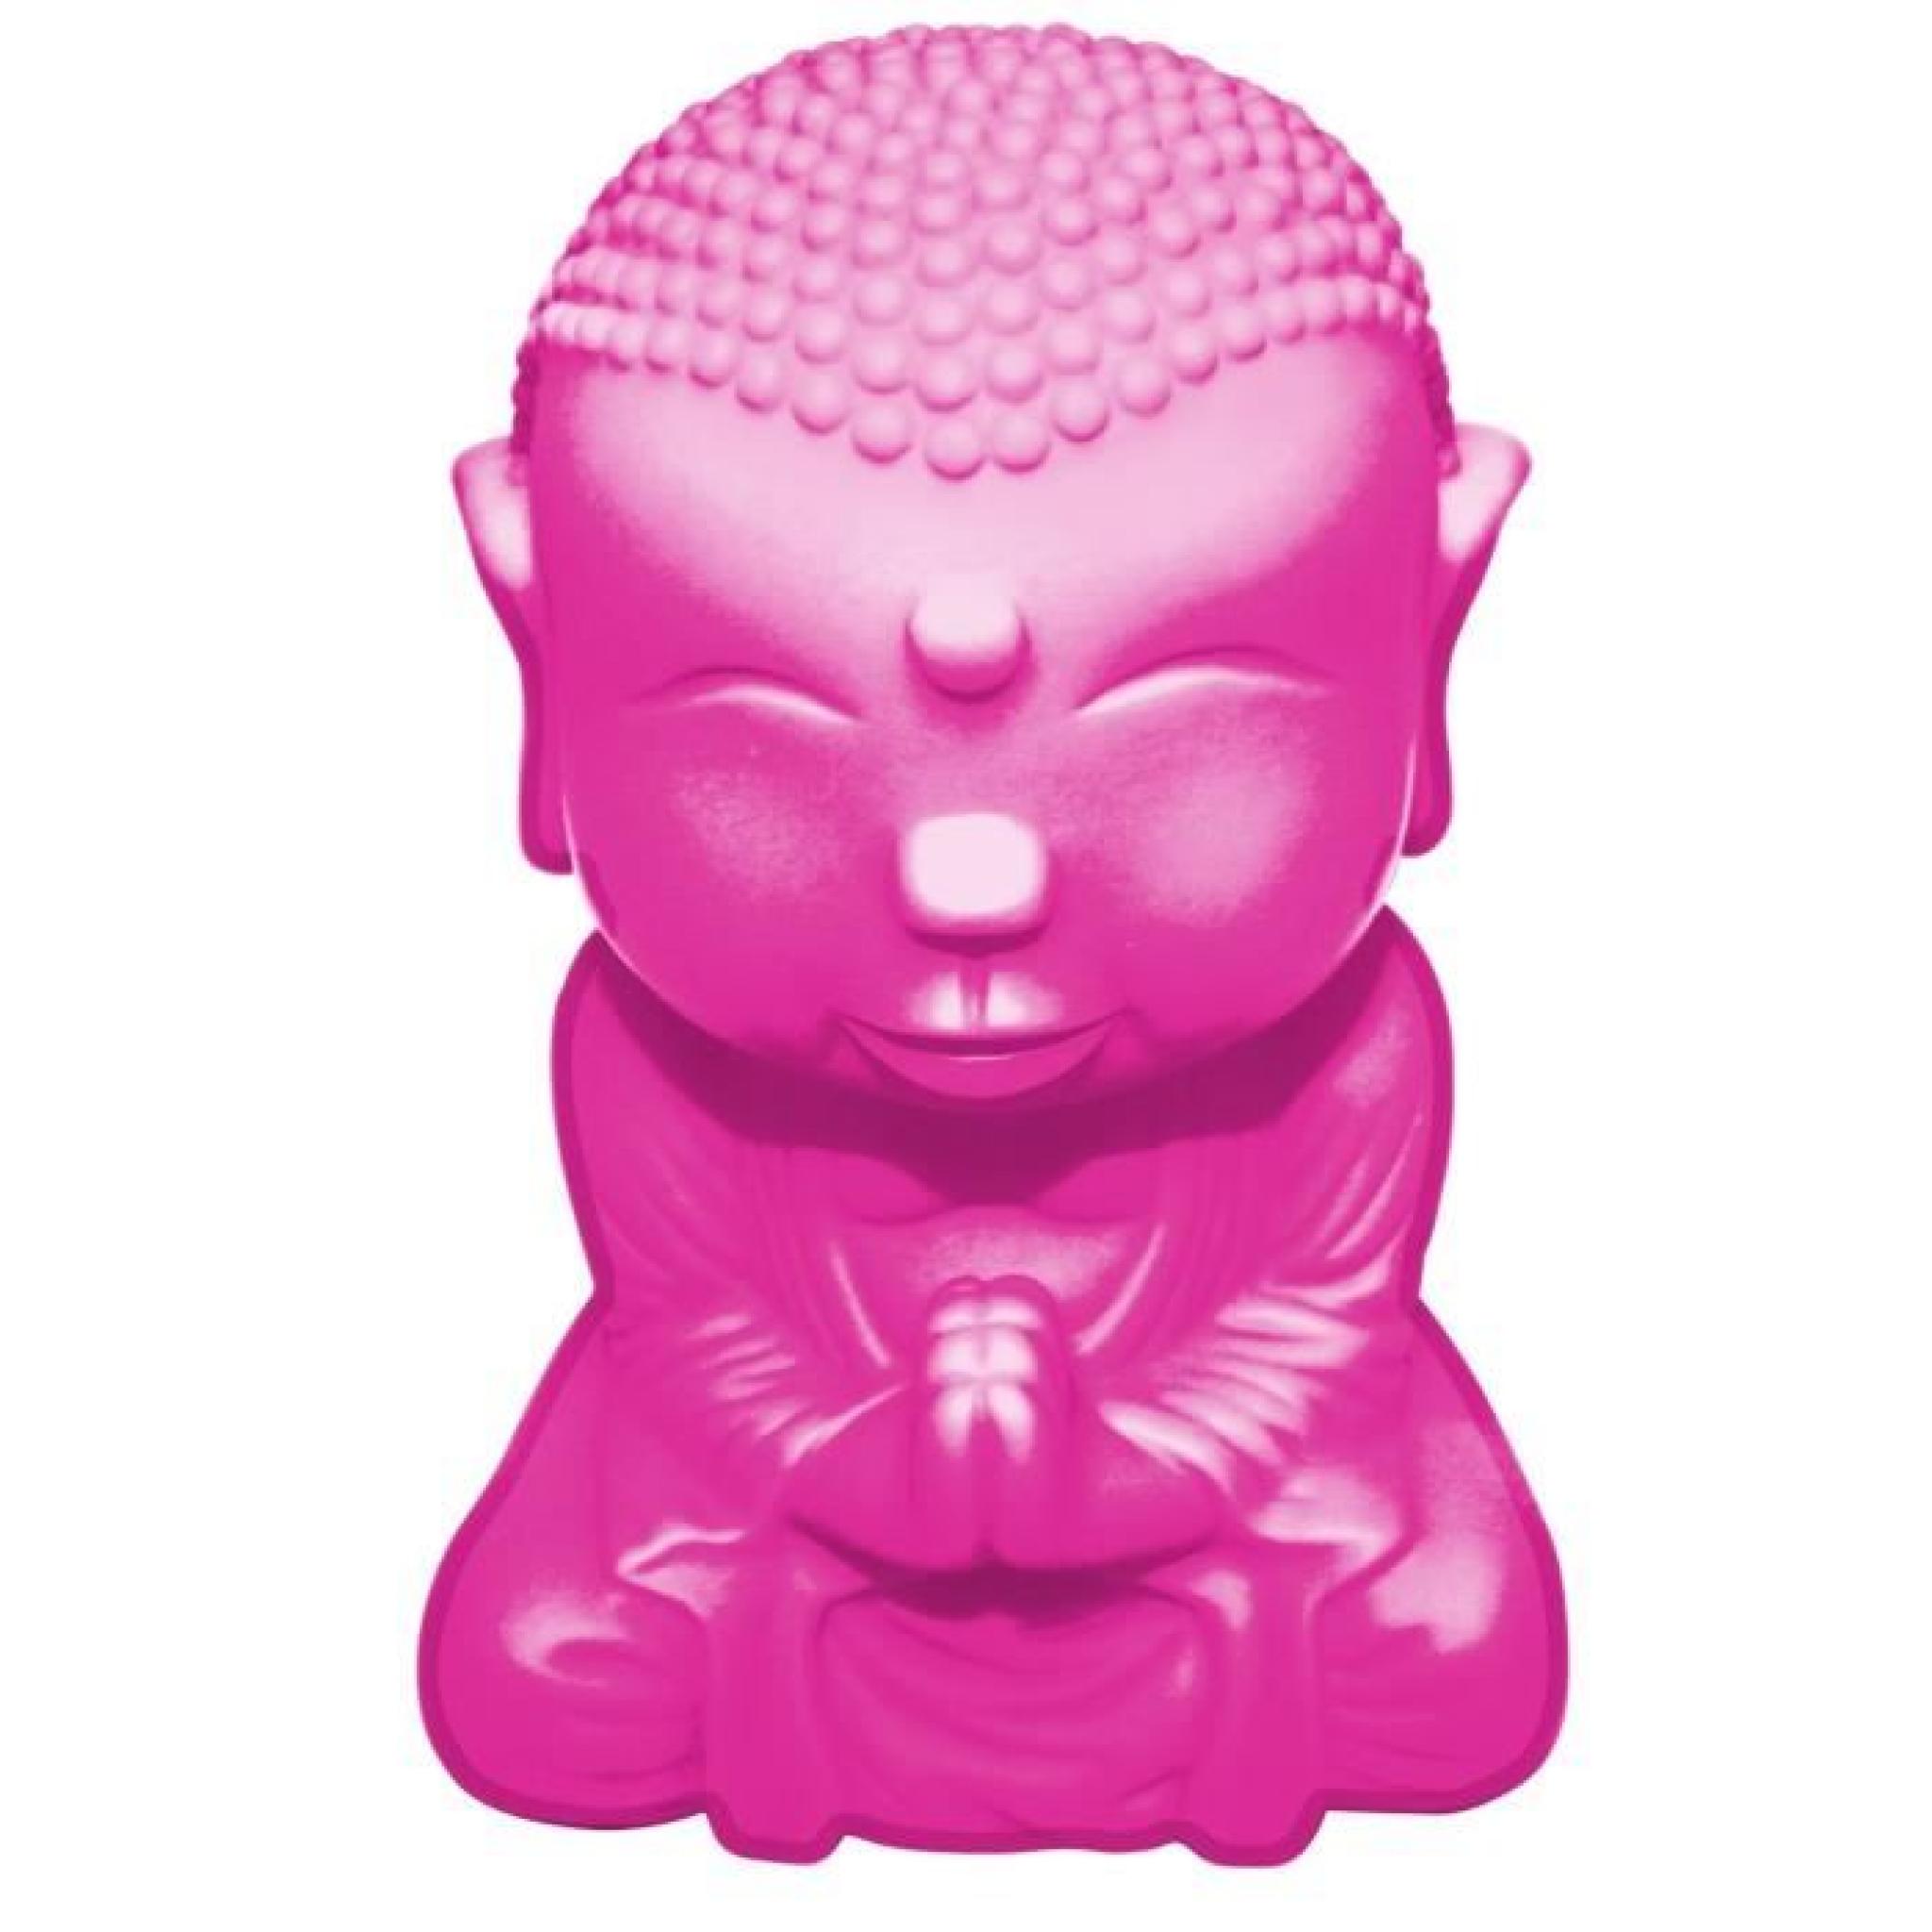 Mini lampe Bouddha rose, luminaire d'ambiance zen, cadeau Bouddha pas cher